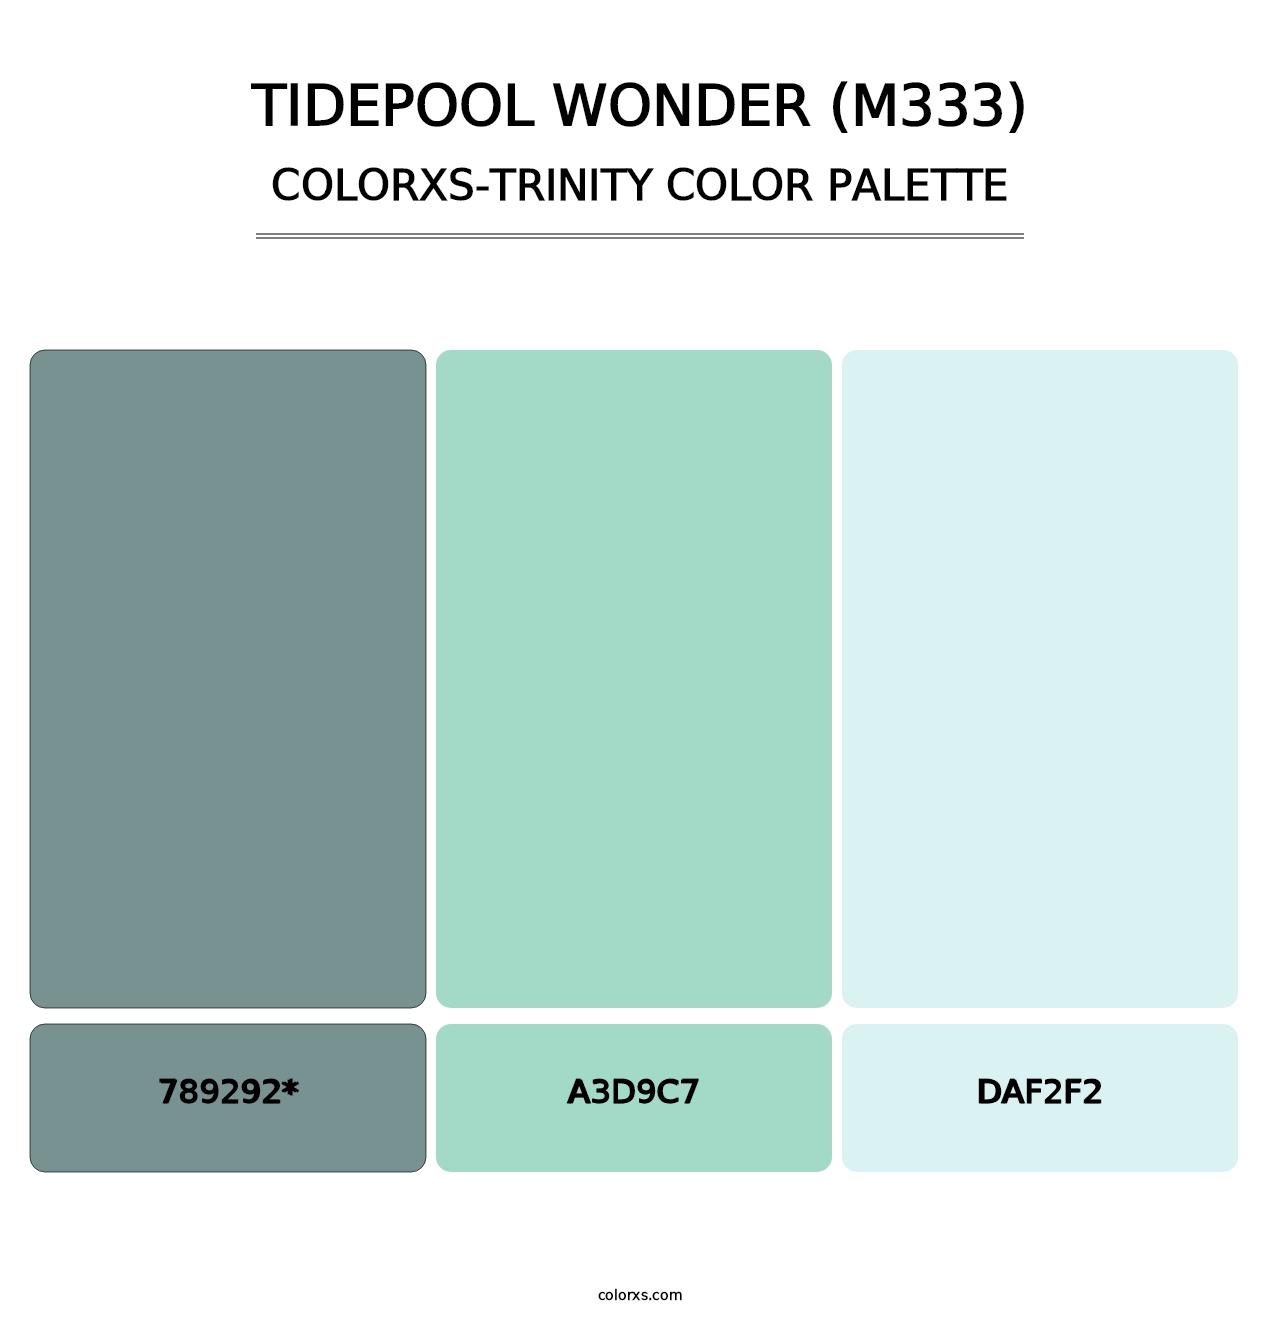 Tidepool Wonder (M333) - Colorxs Trinity Palette